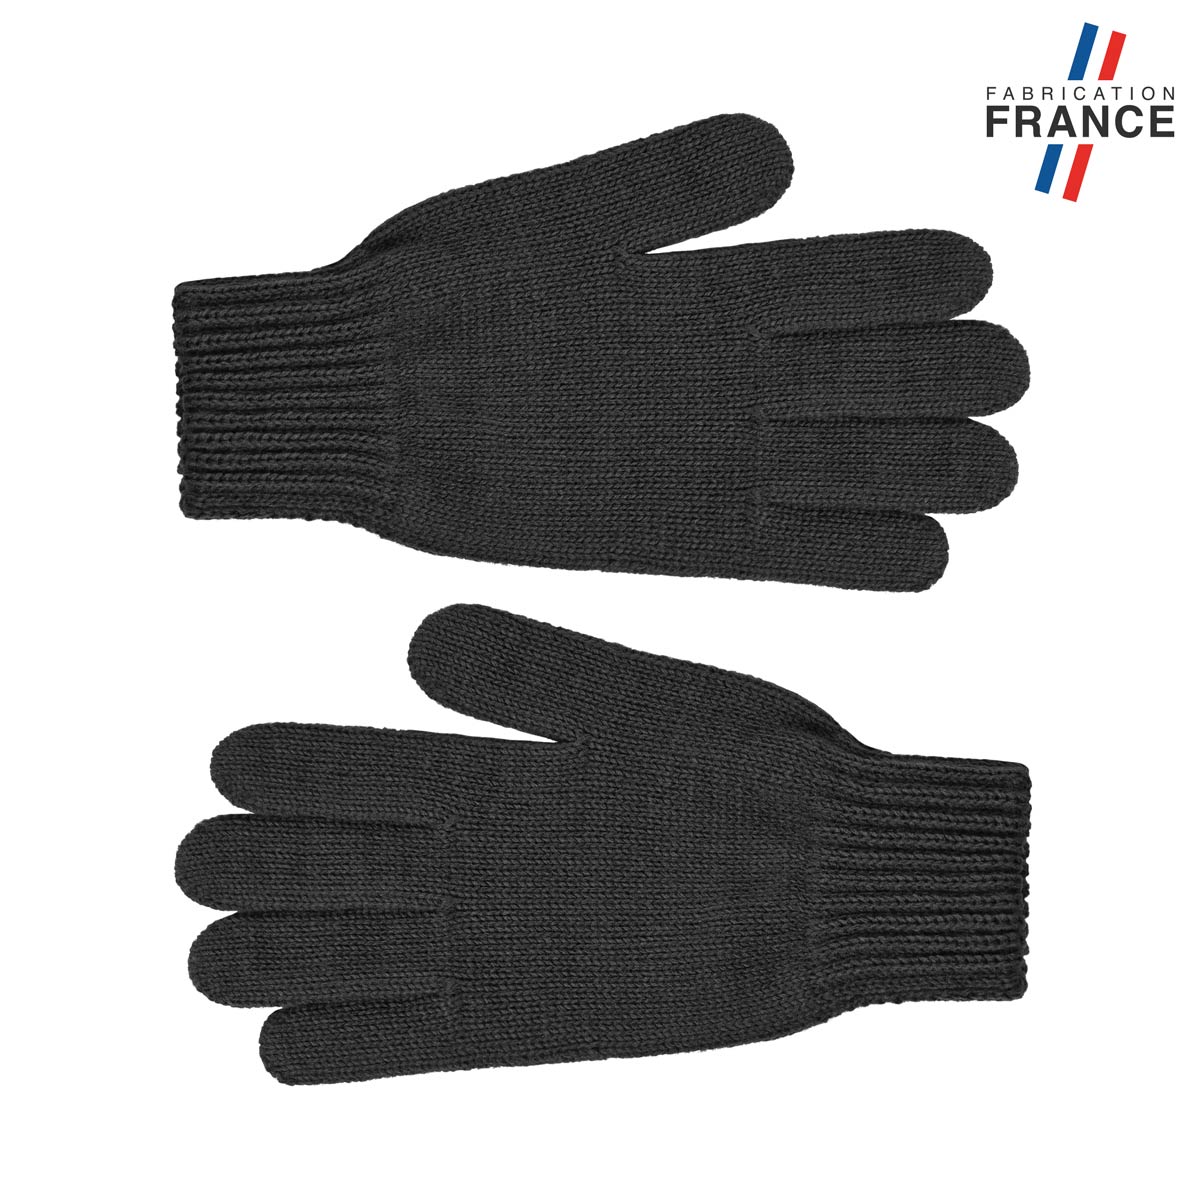 GA-00060_A12-1FR_Paire-gants_femme-gris-sombre-made-in-France